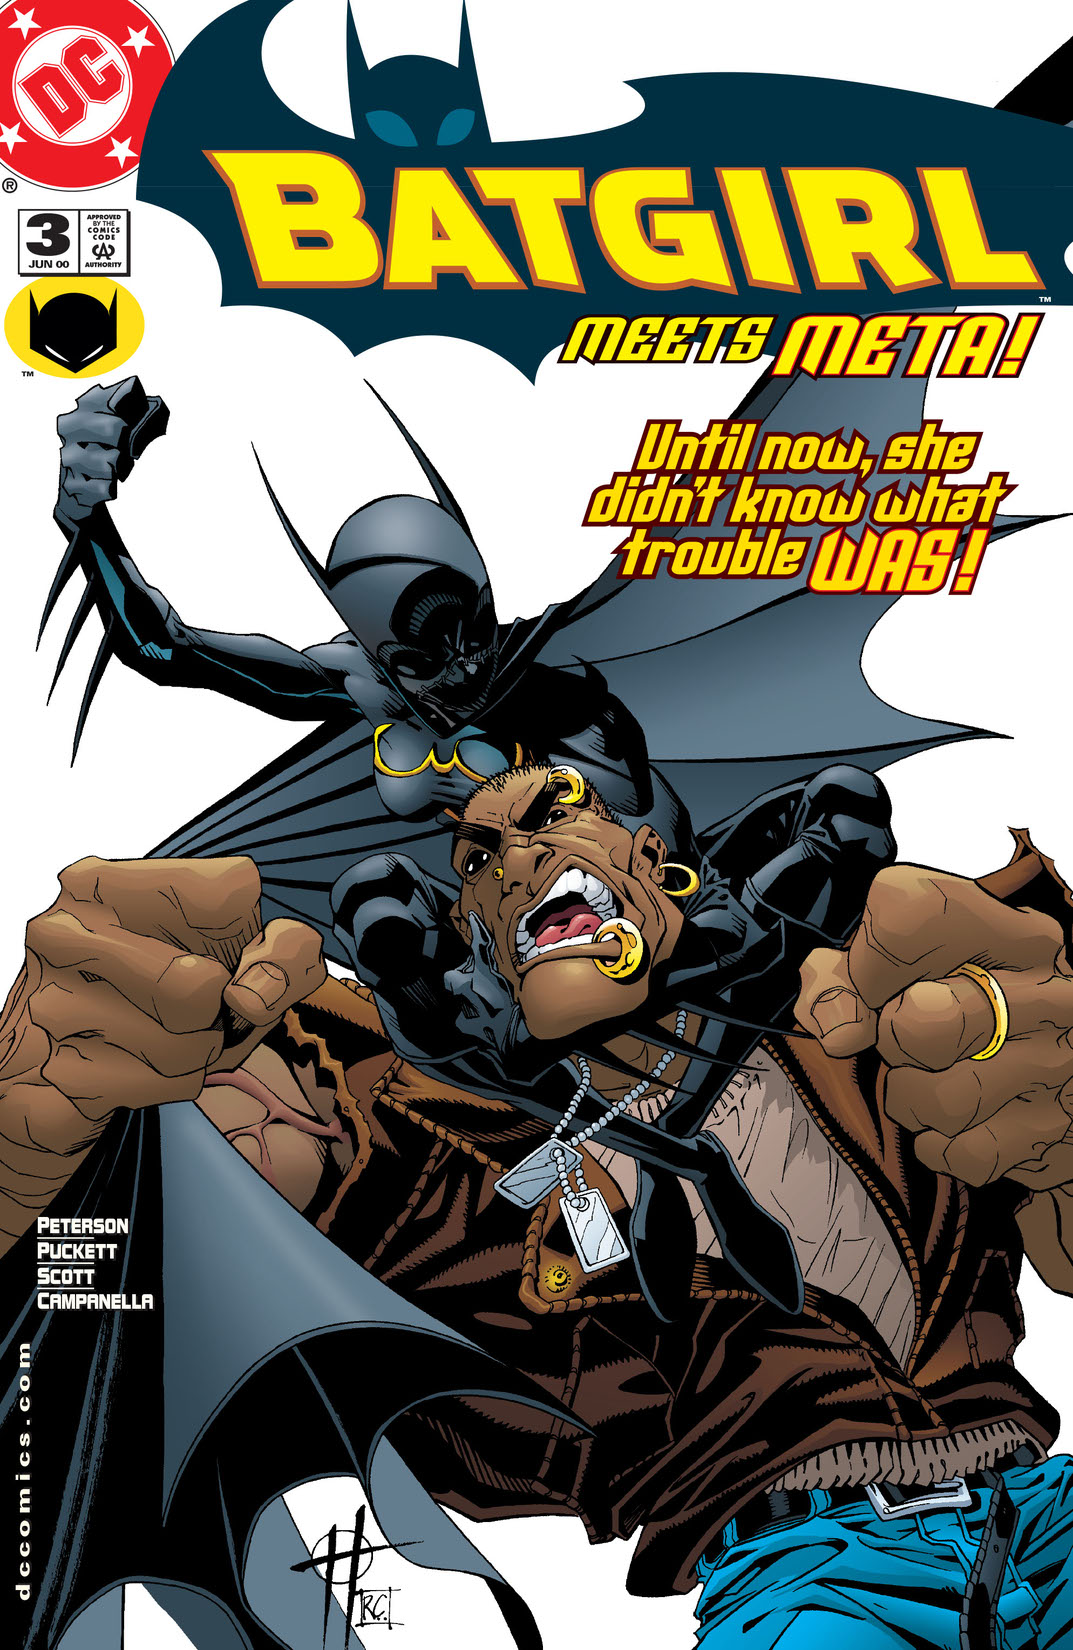 Batgirl (2000-) #3 preview images